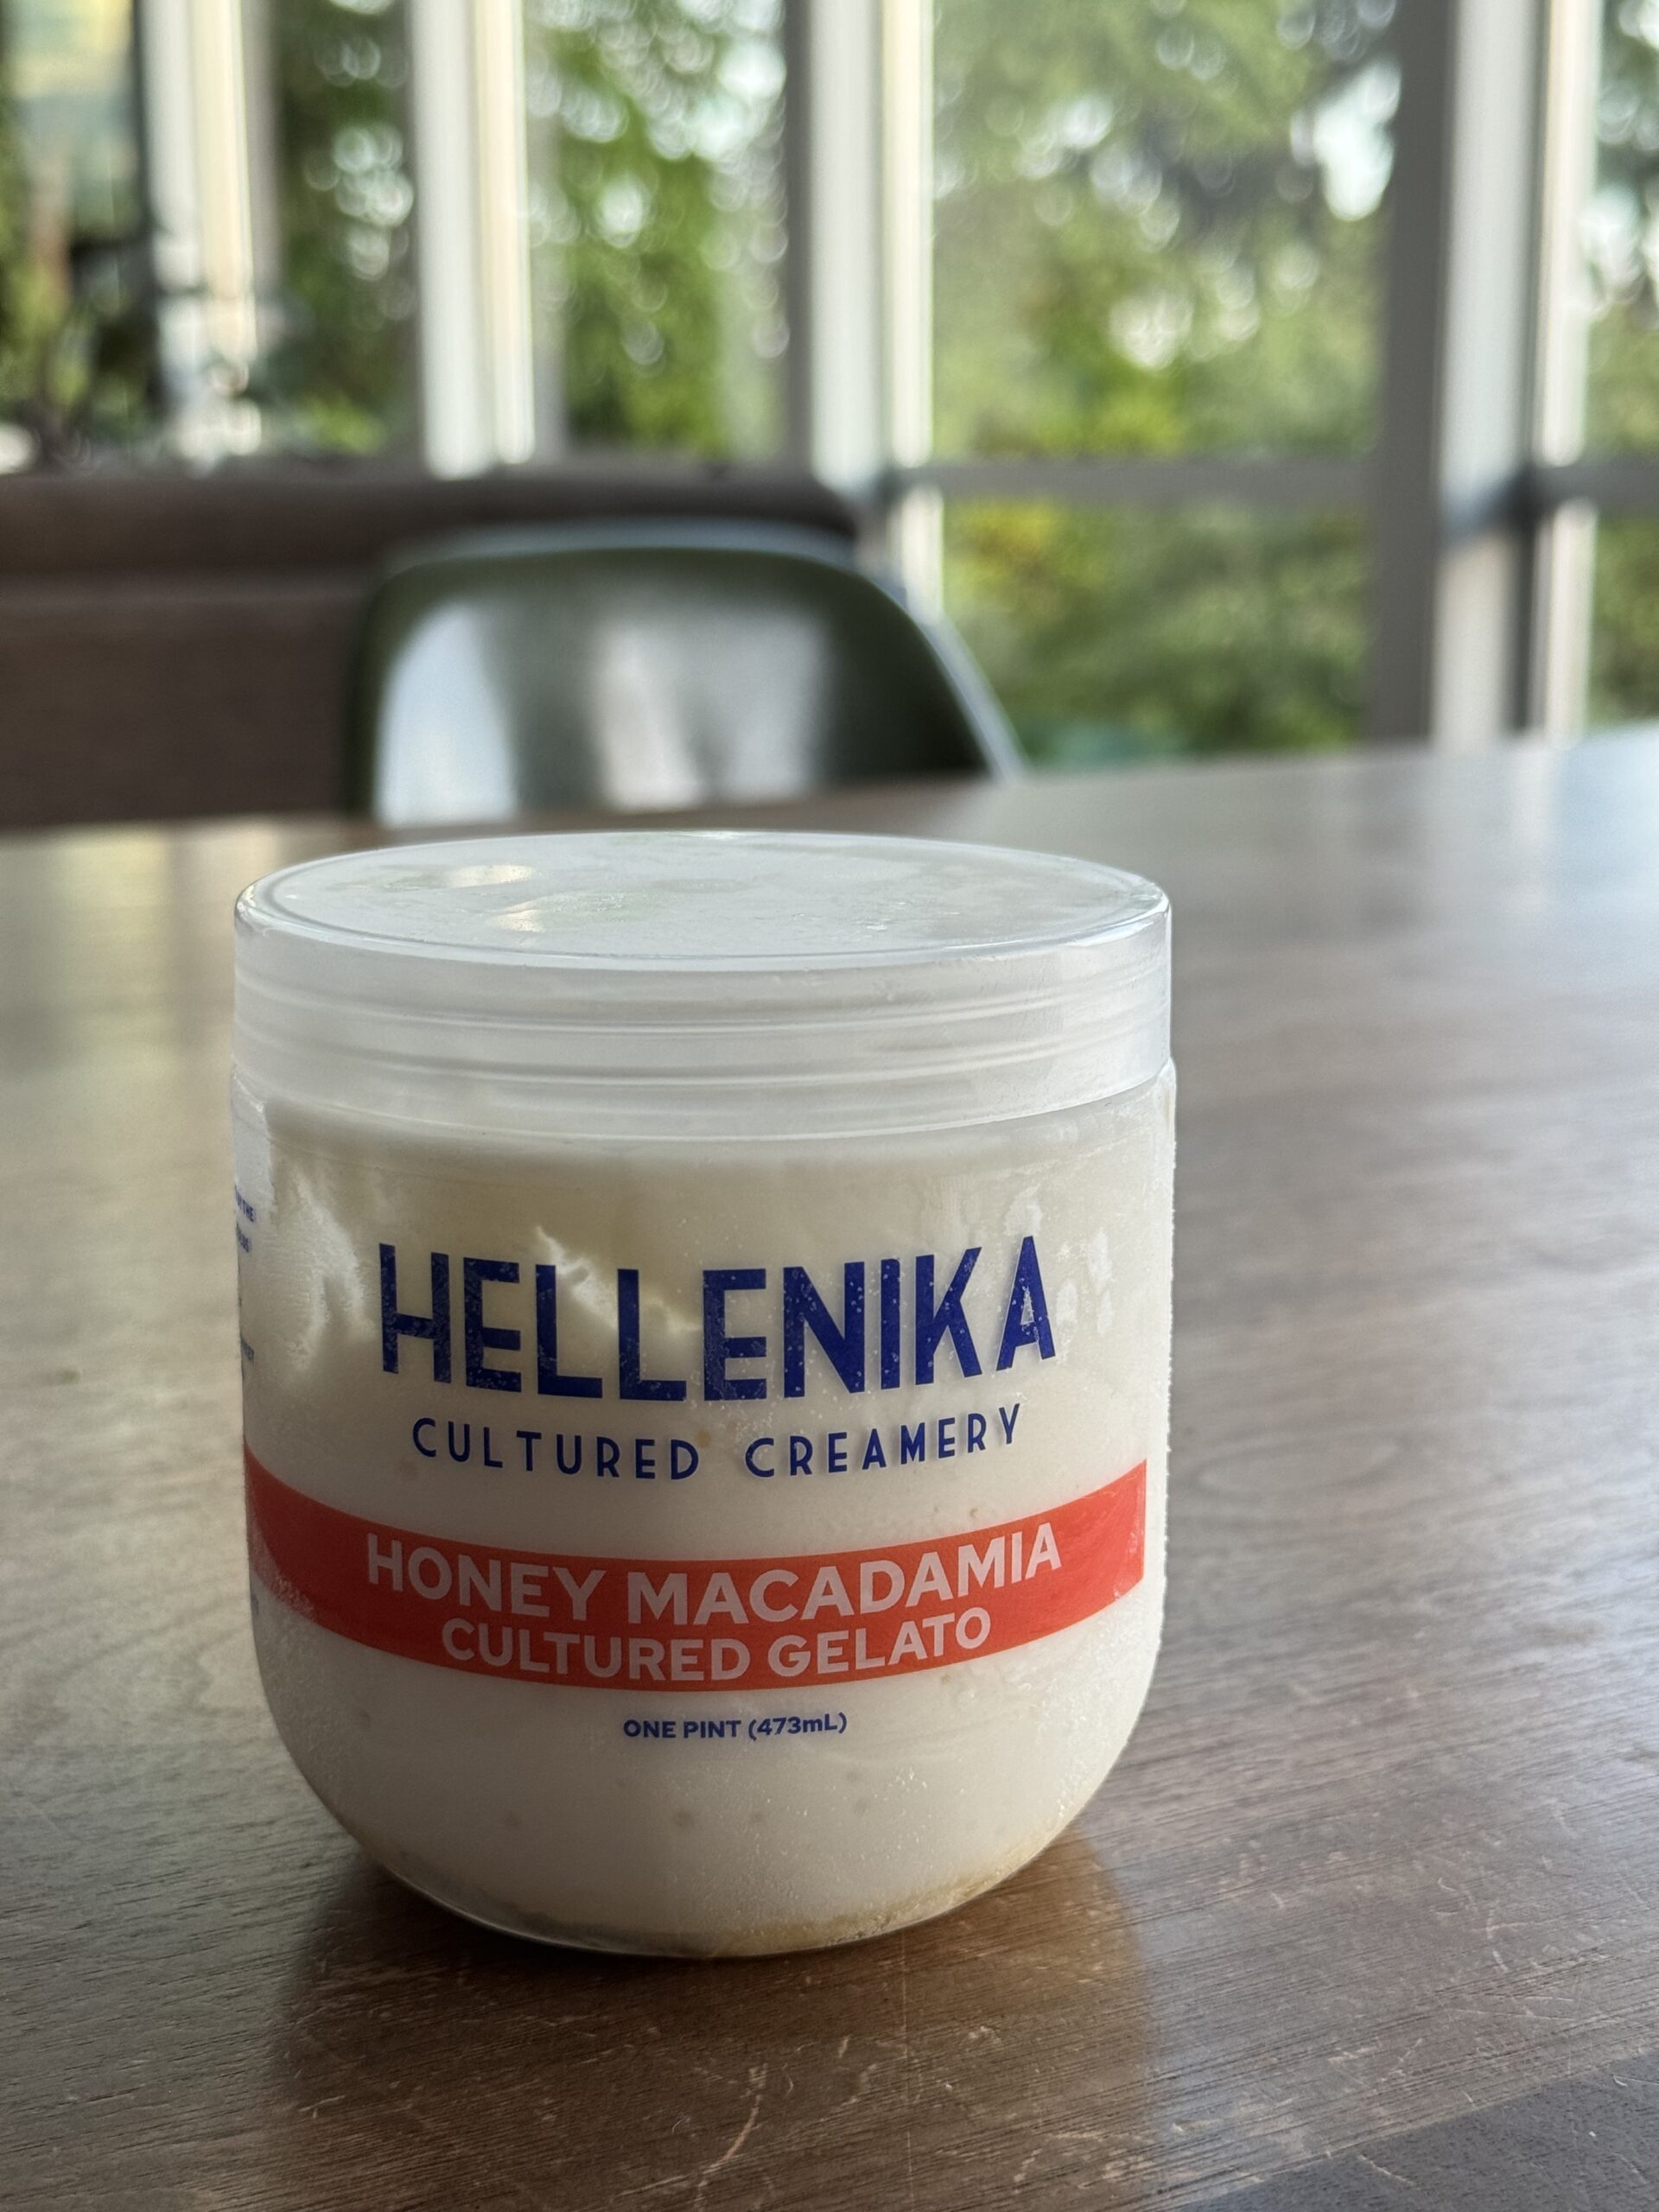 A Pint of Hellenika Cultured Cream